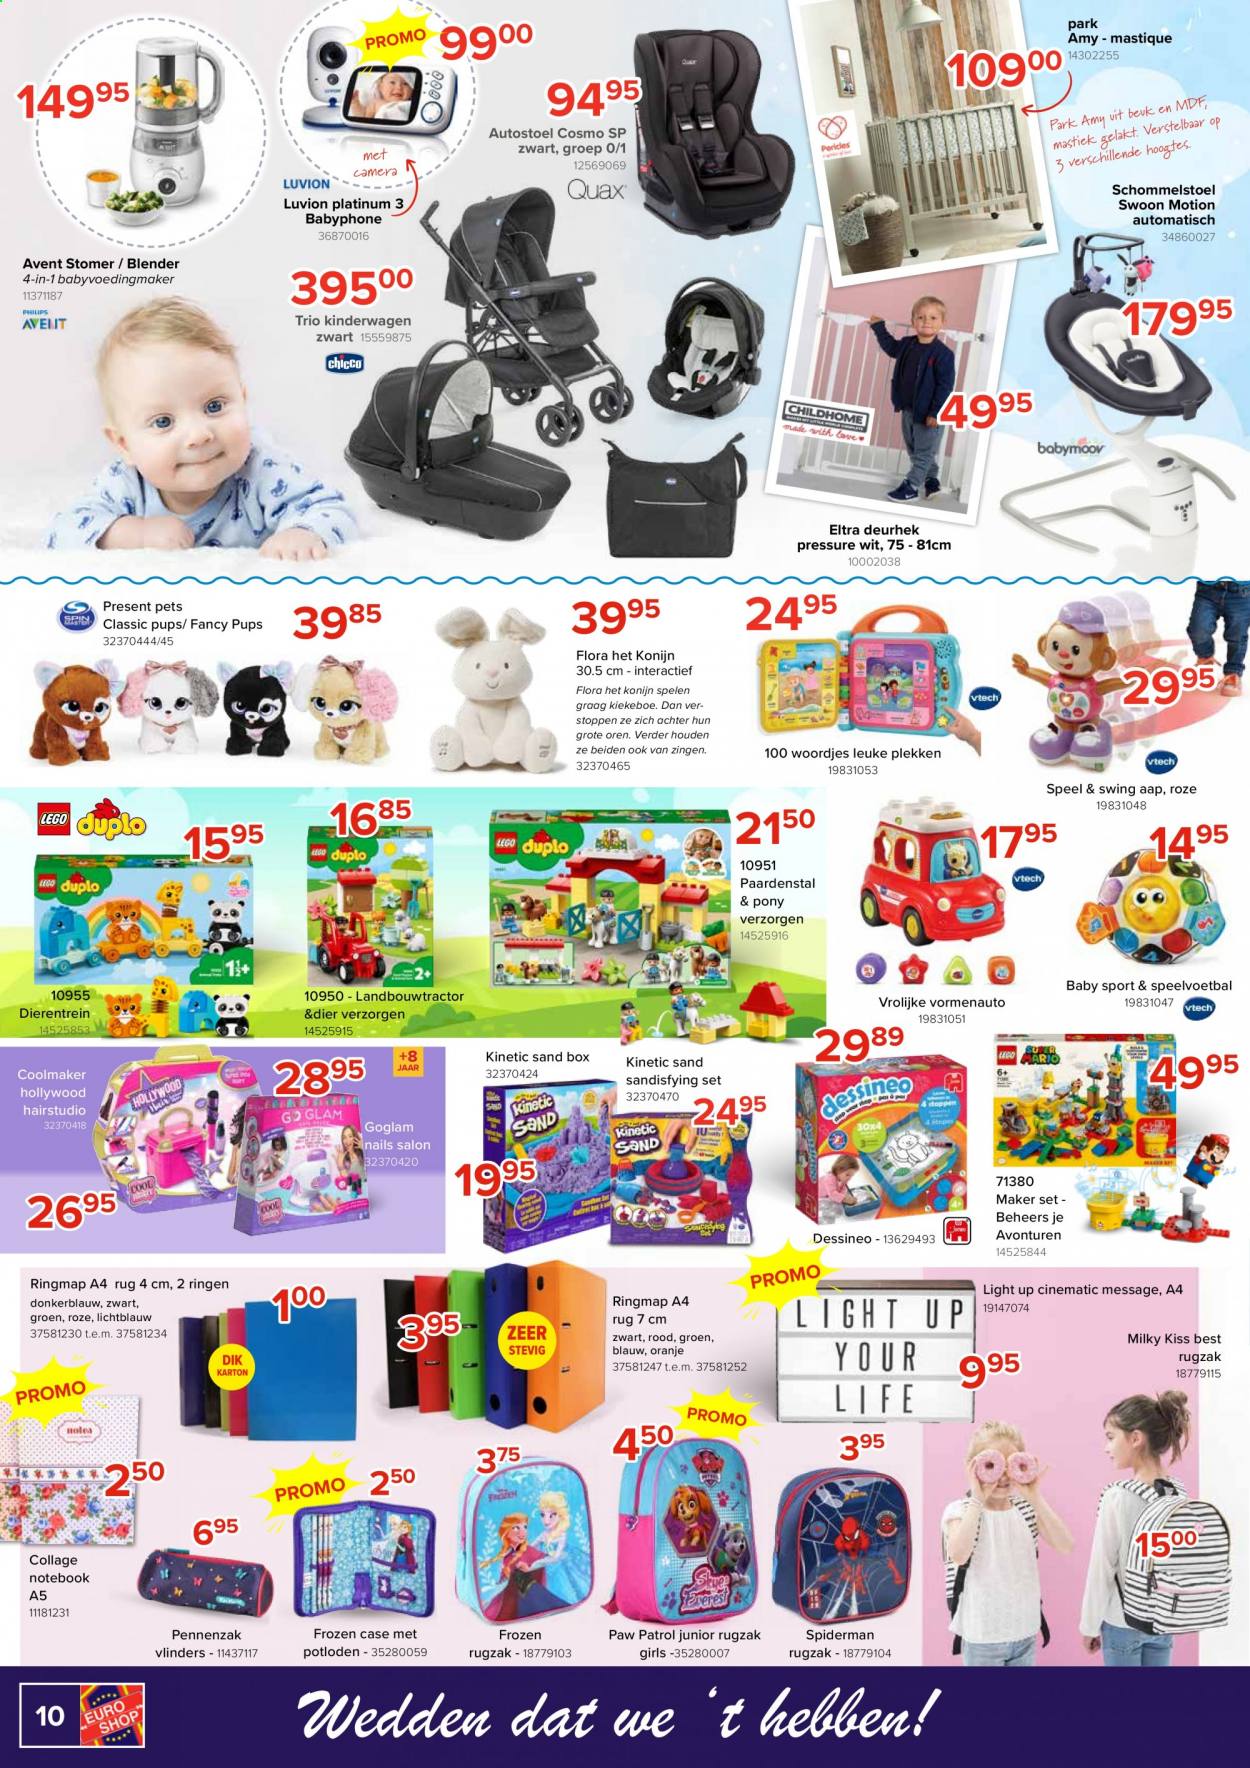 thumbnail - Euro Shop-aanbieding - 18/03/2021 - 18/04/2021 -  producten in de aanbieding - Avent, Dessineo, Paw Patrol, rugzak, Frozen, blender, camera, Spiderman. Pagina 10.